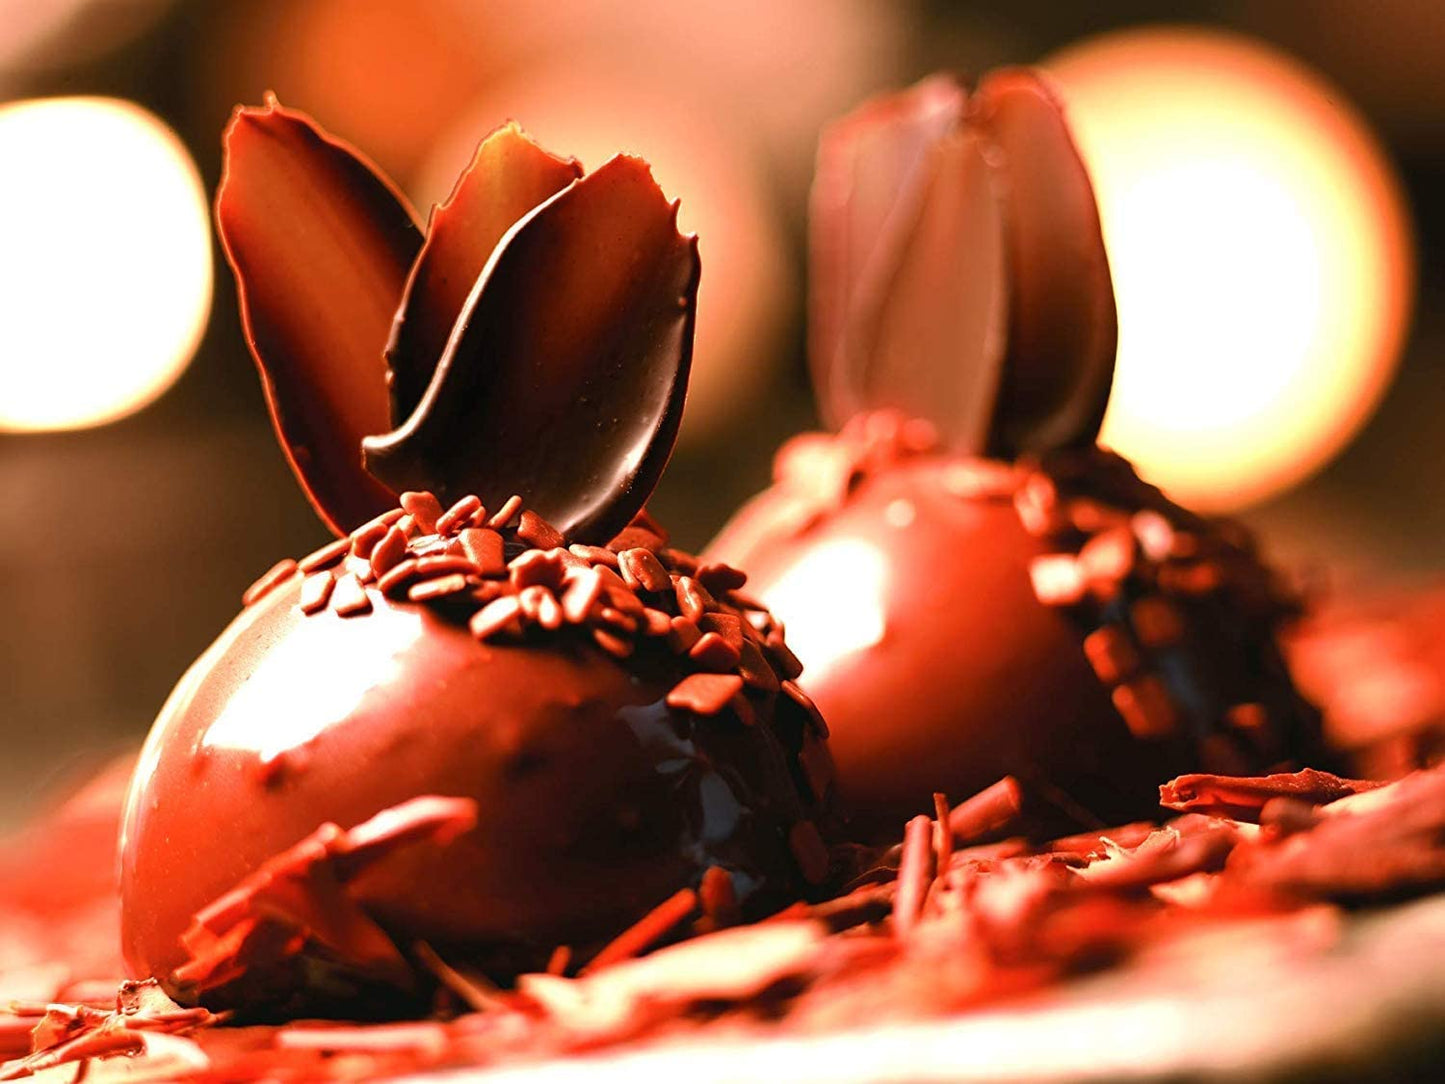 Callebaut Finest 33,6% Chocolate Belga - Leche 823 Callets 2,5 kg